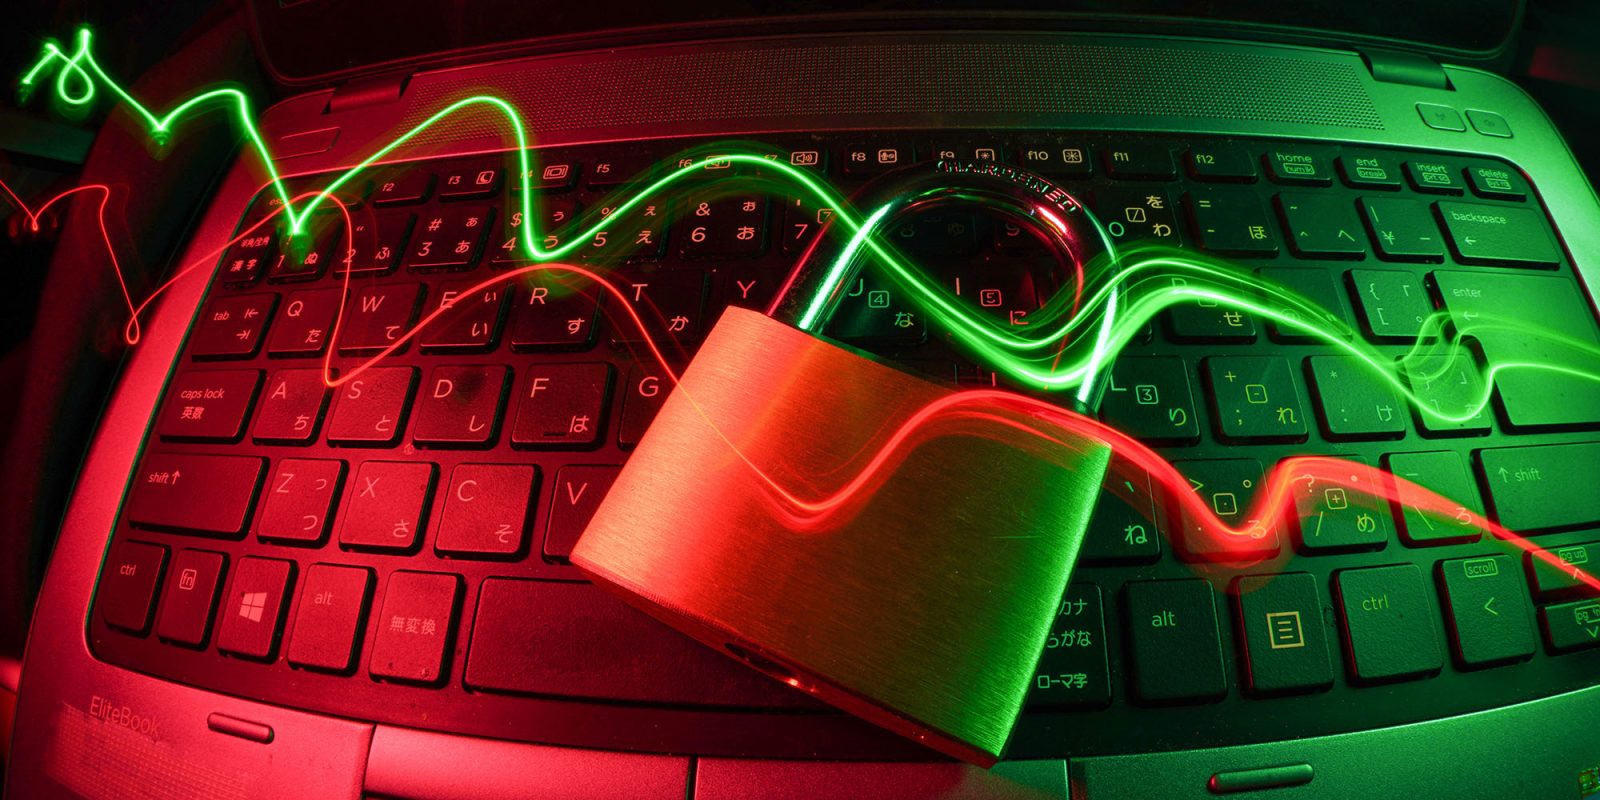 Government Internet censorship | Laptop with padlock